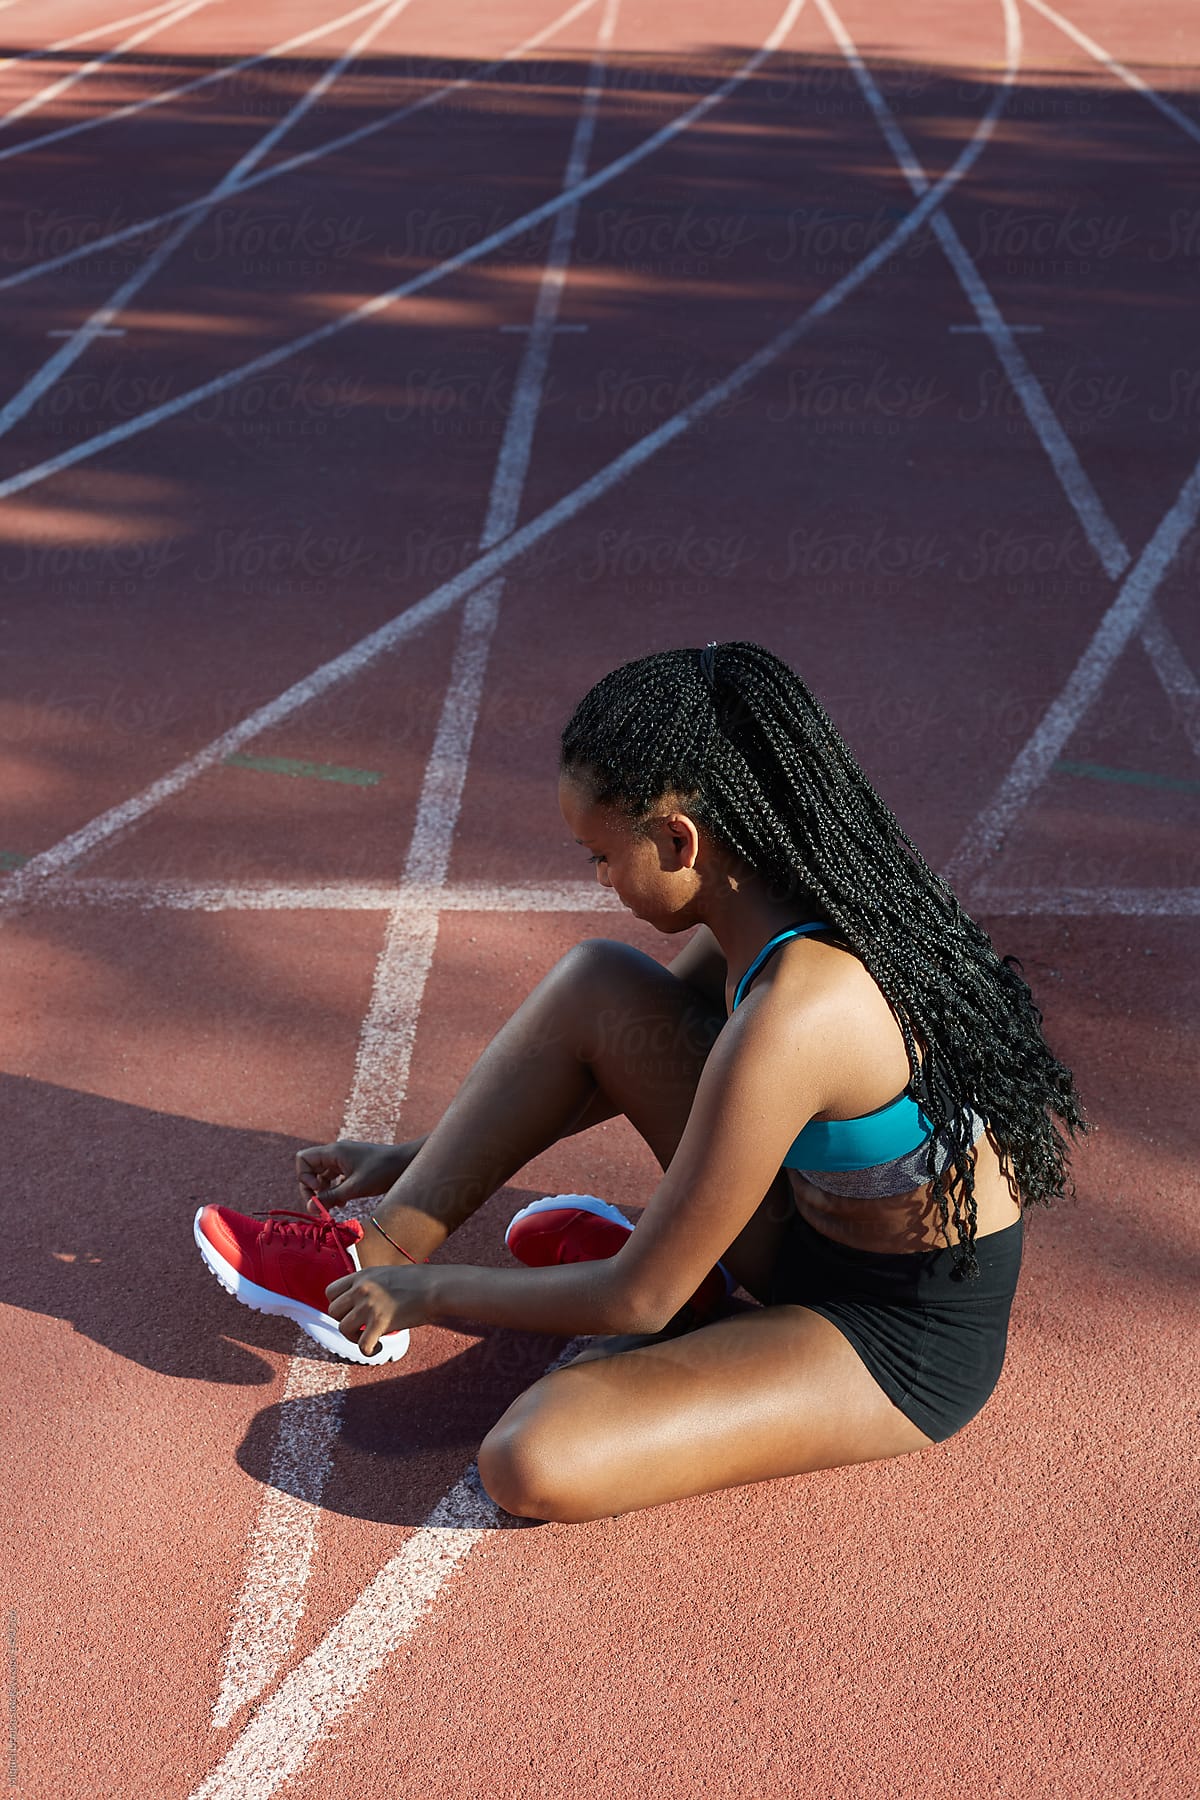 Black athlete tying her footwear in track and field